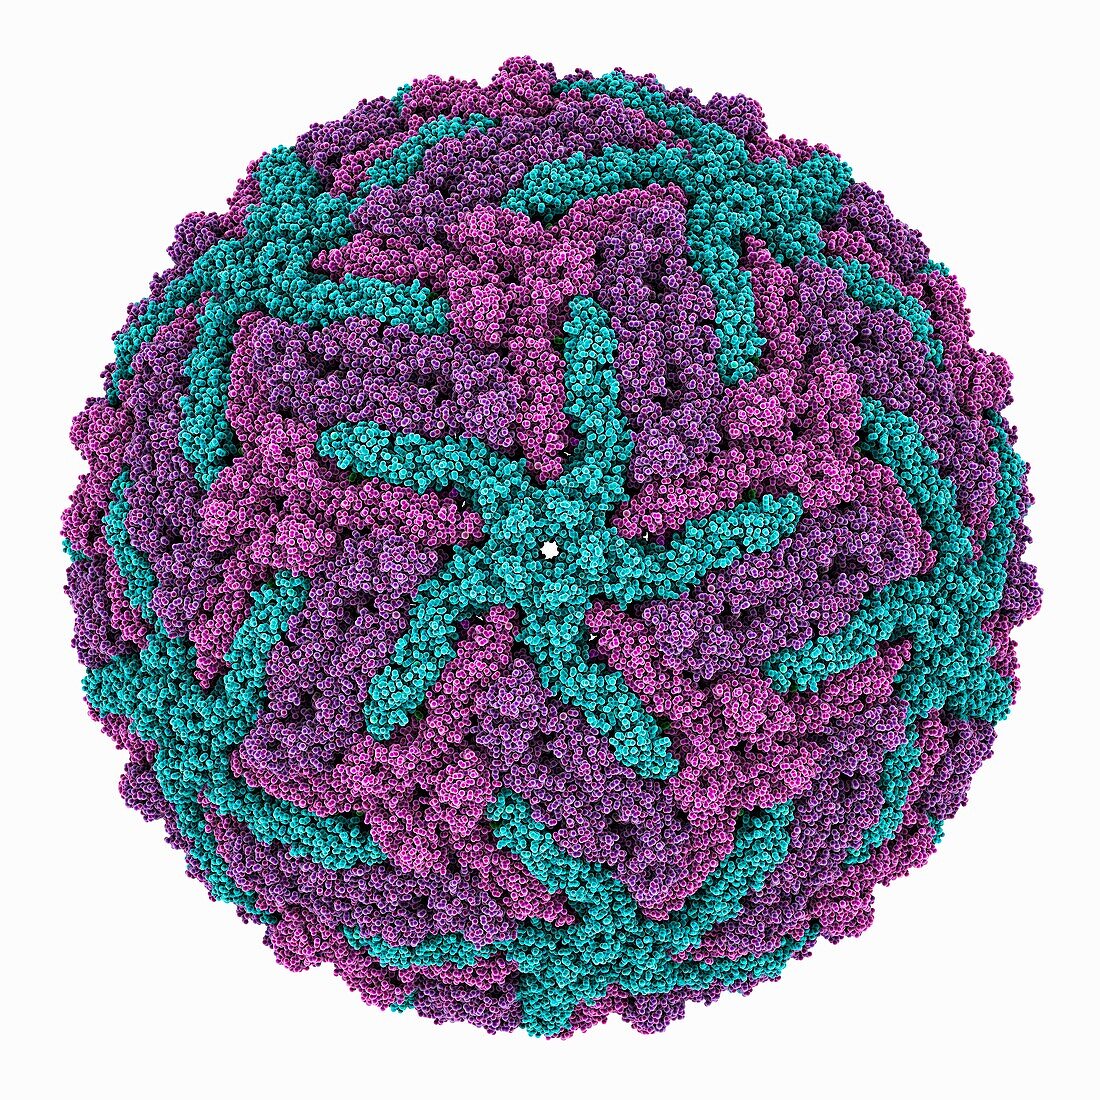 Usutu virus capsid, molecular model